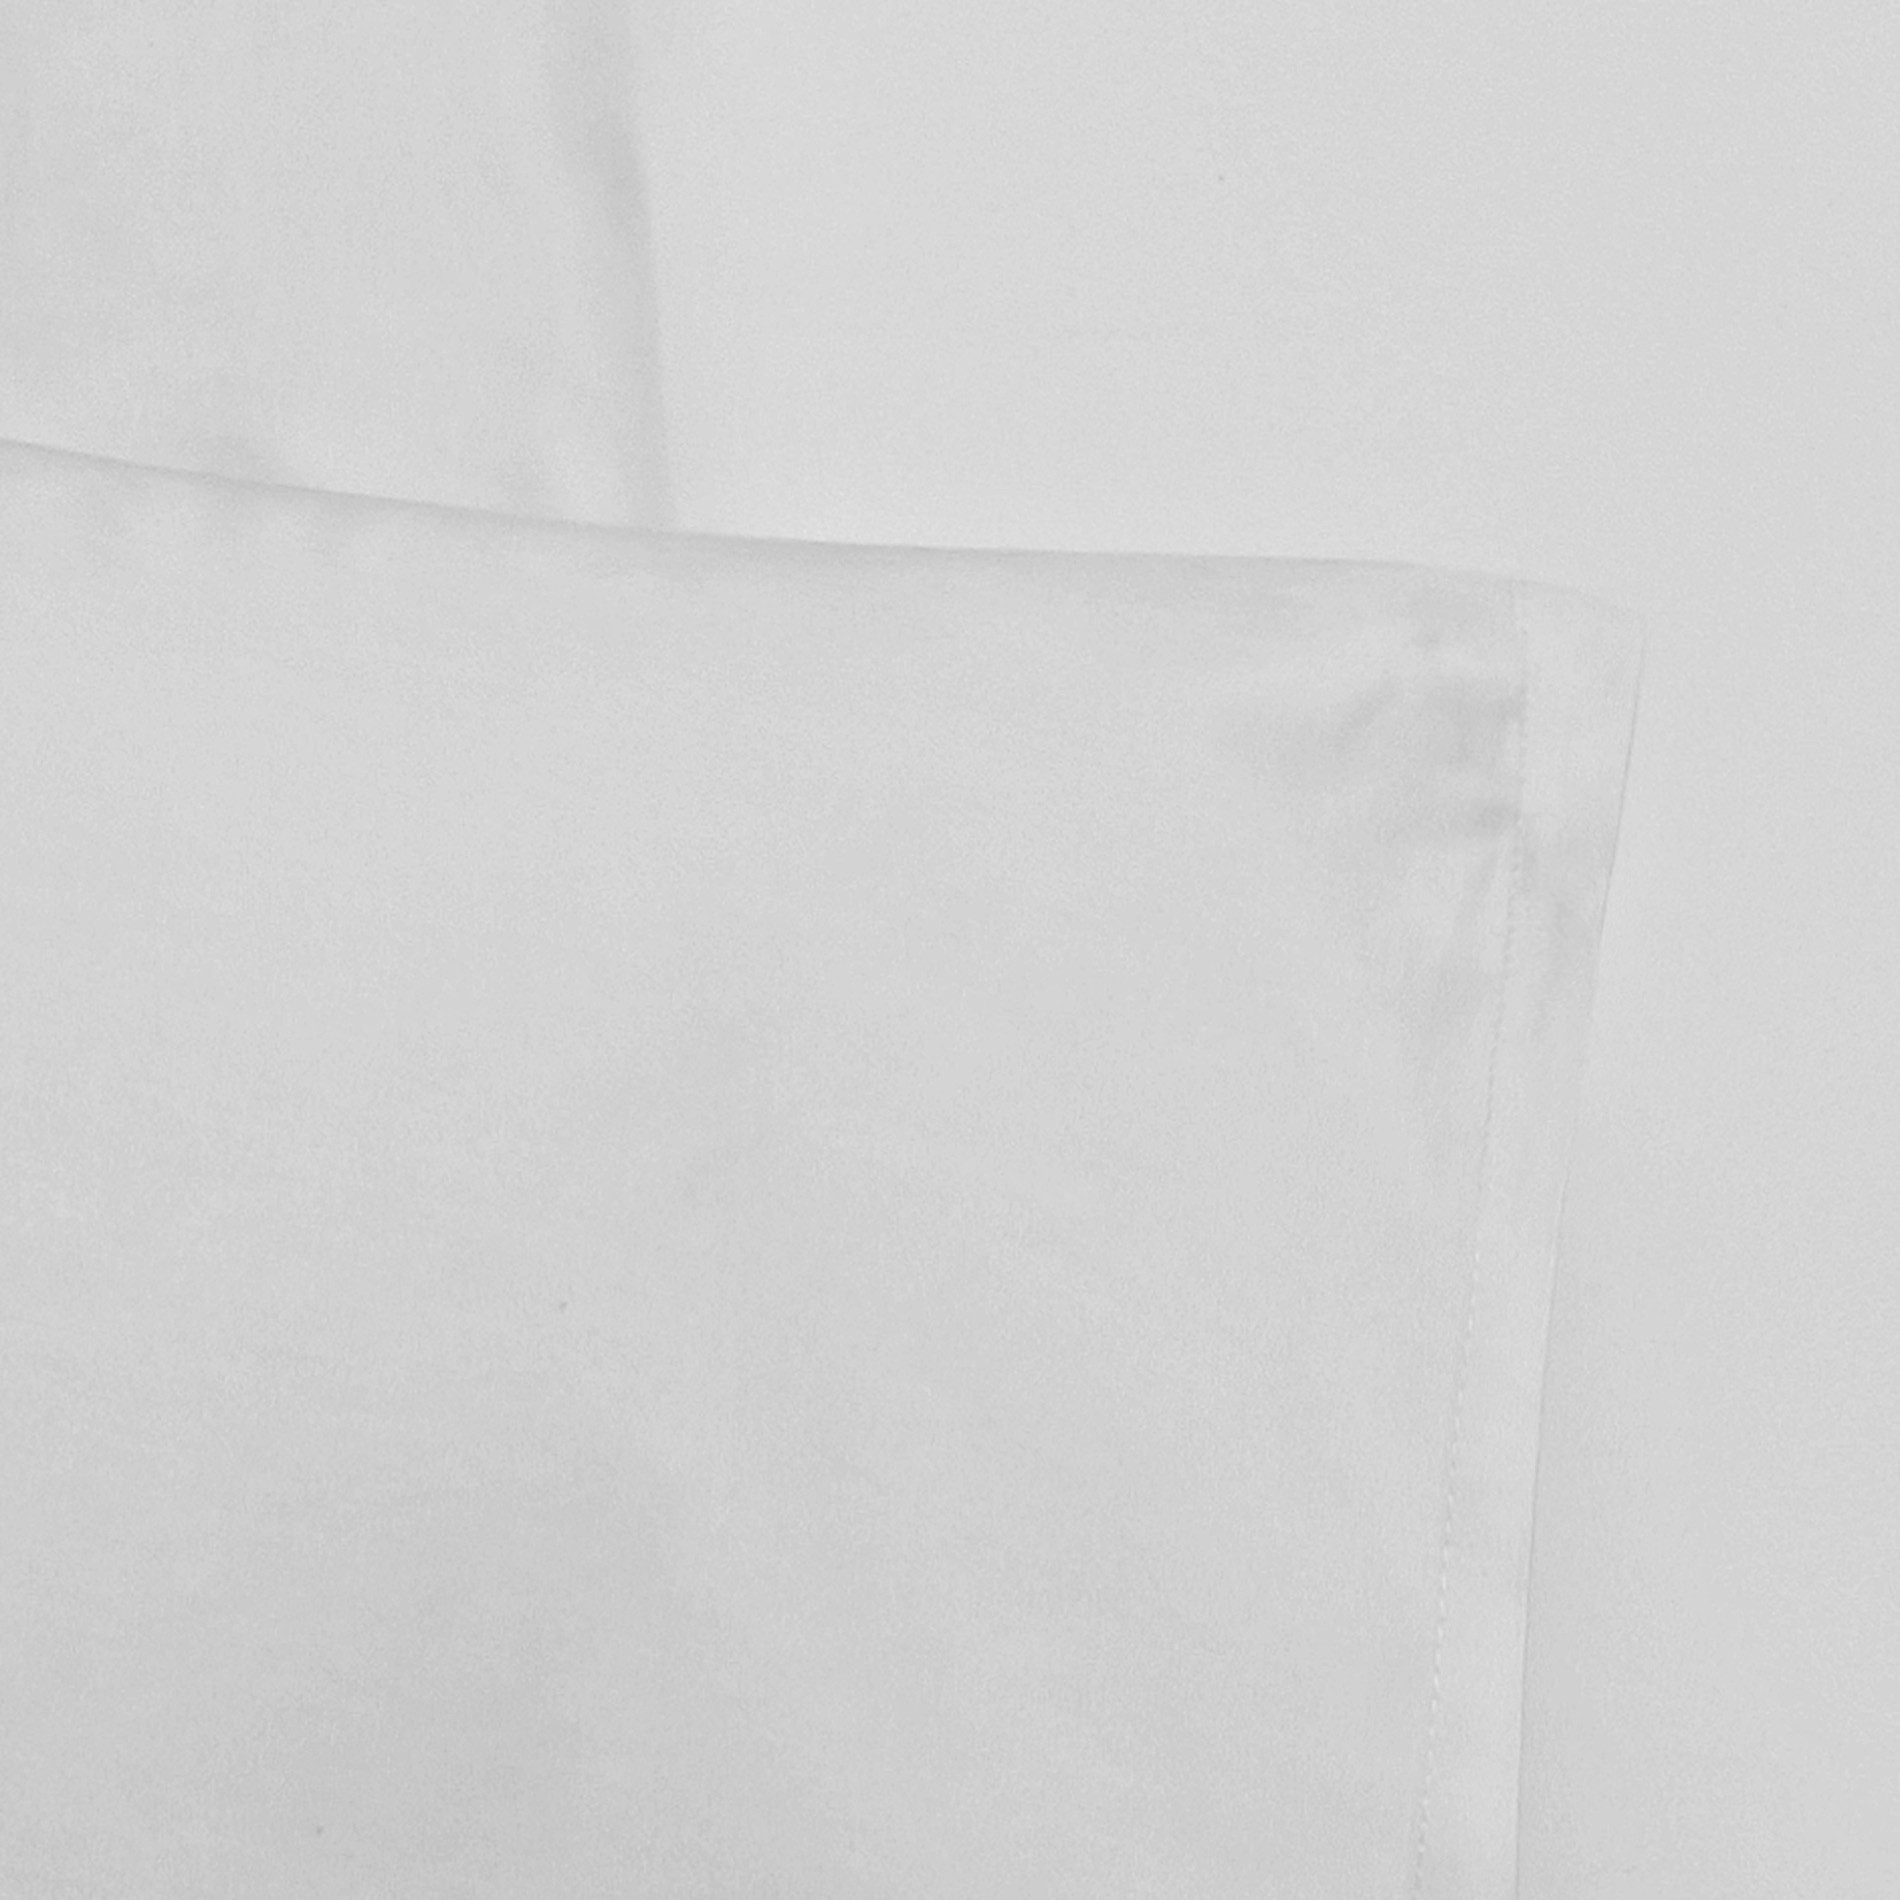 Zefiro duvet cover set in 100% cotton satin, Greige, large image number 2